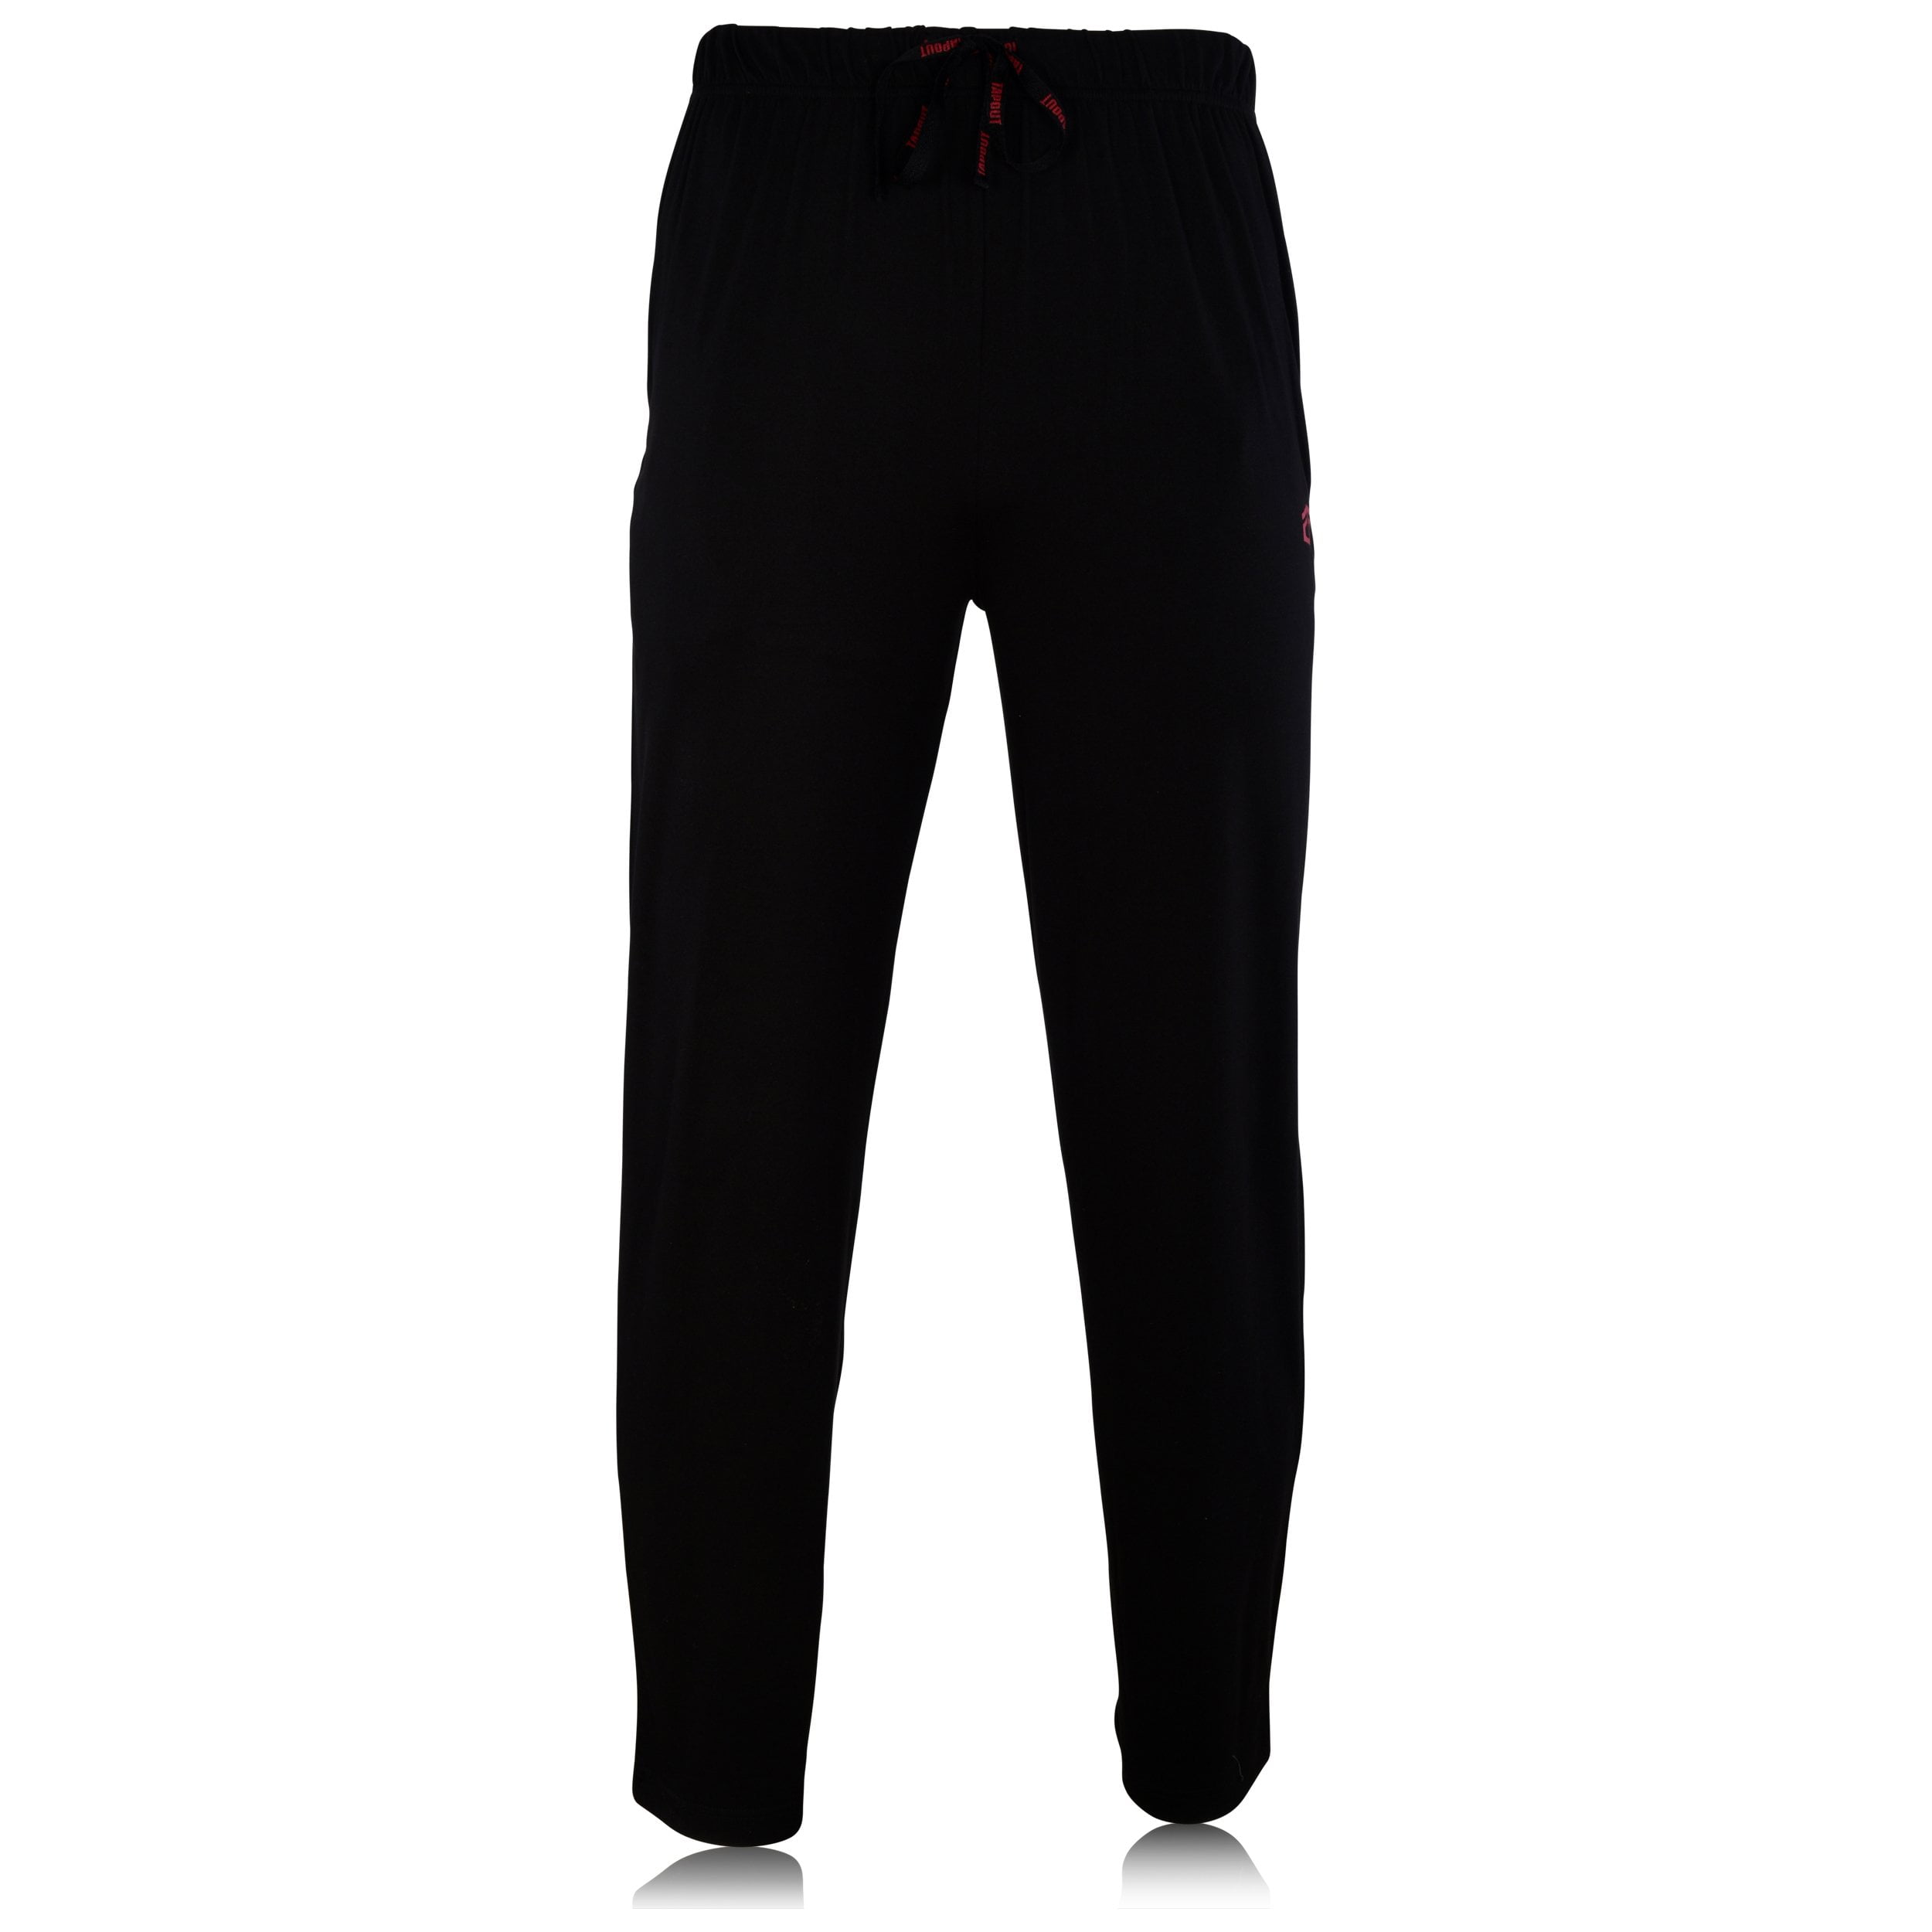 Tapout - TAPOUT Mens Lounge Pants Pockets Drawstring Super Soft Jersey ...